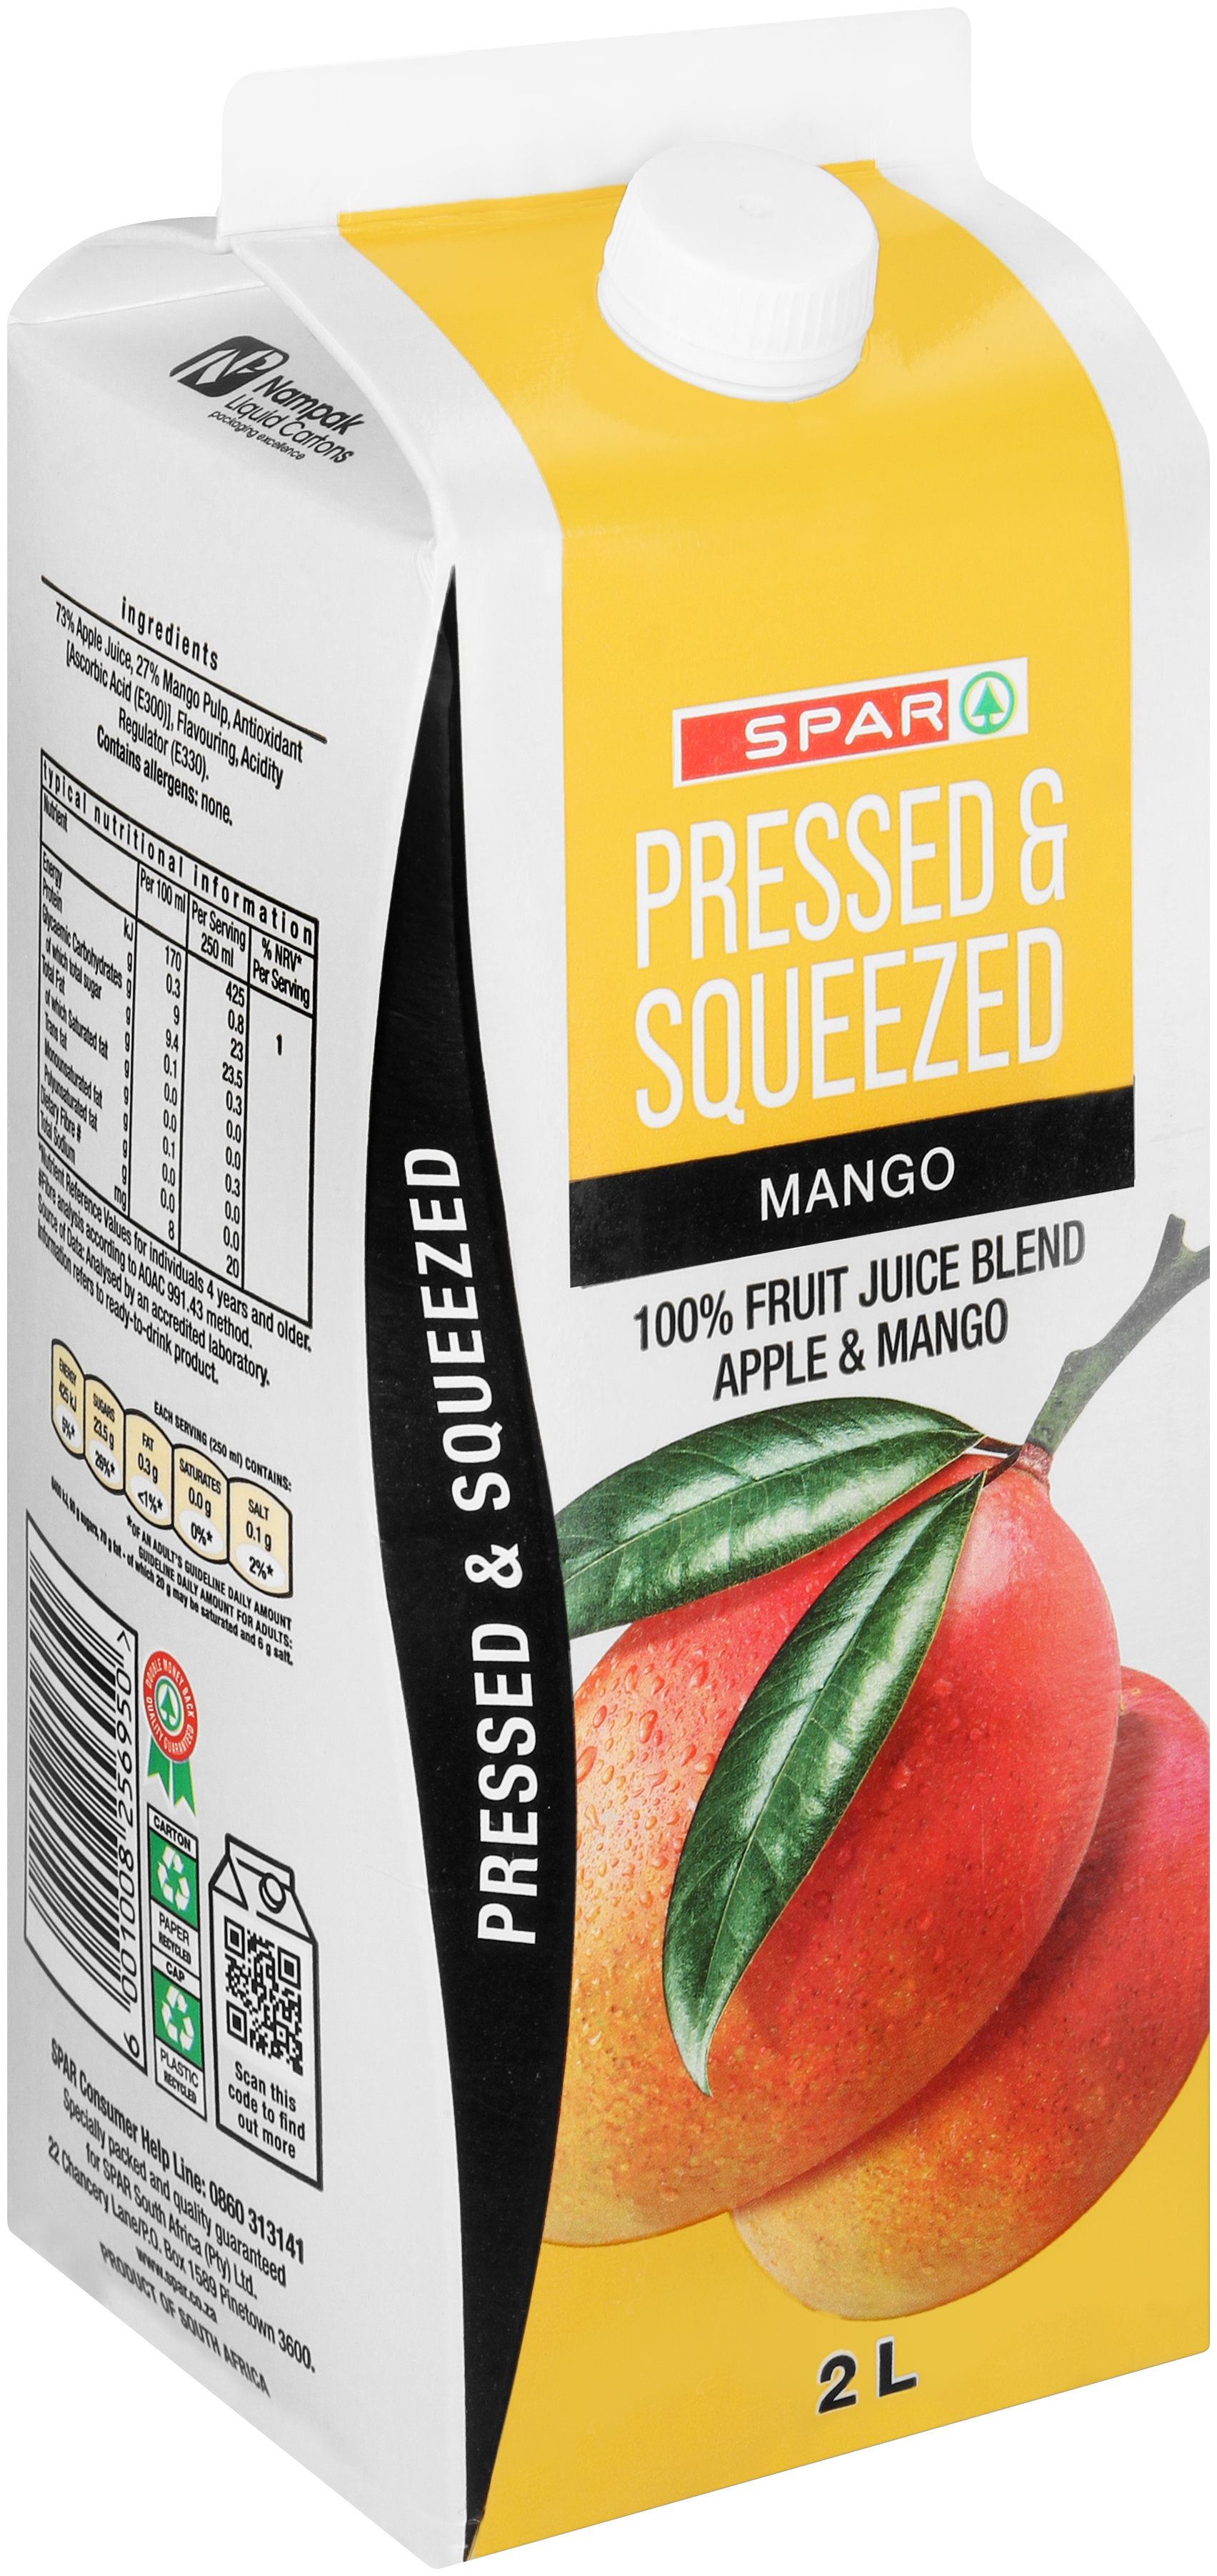 100% fruit juice - mango